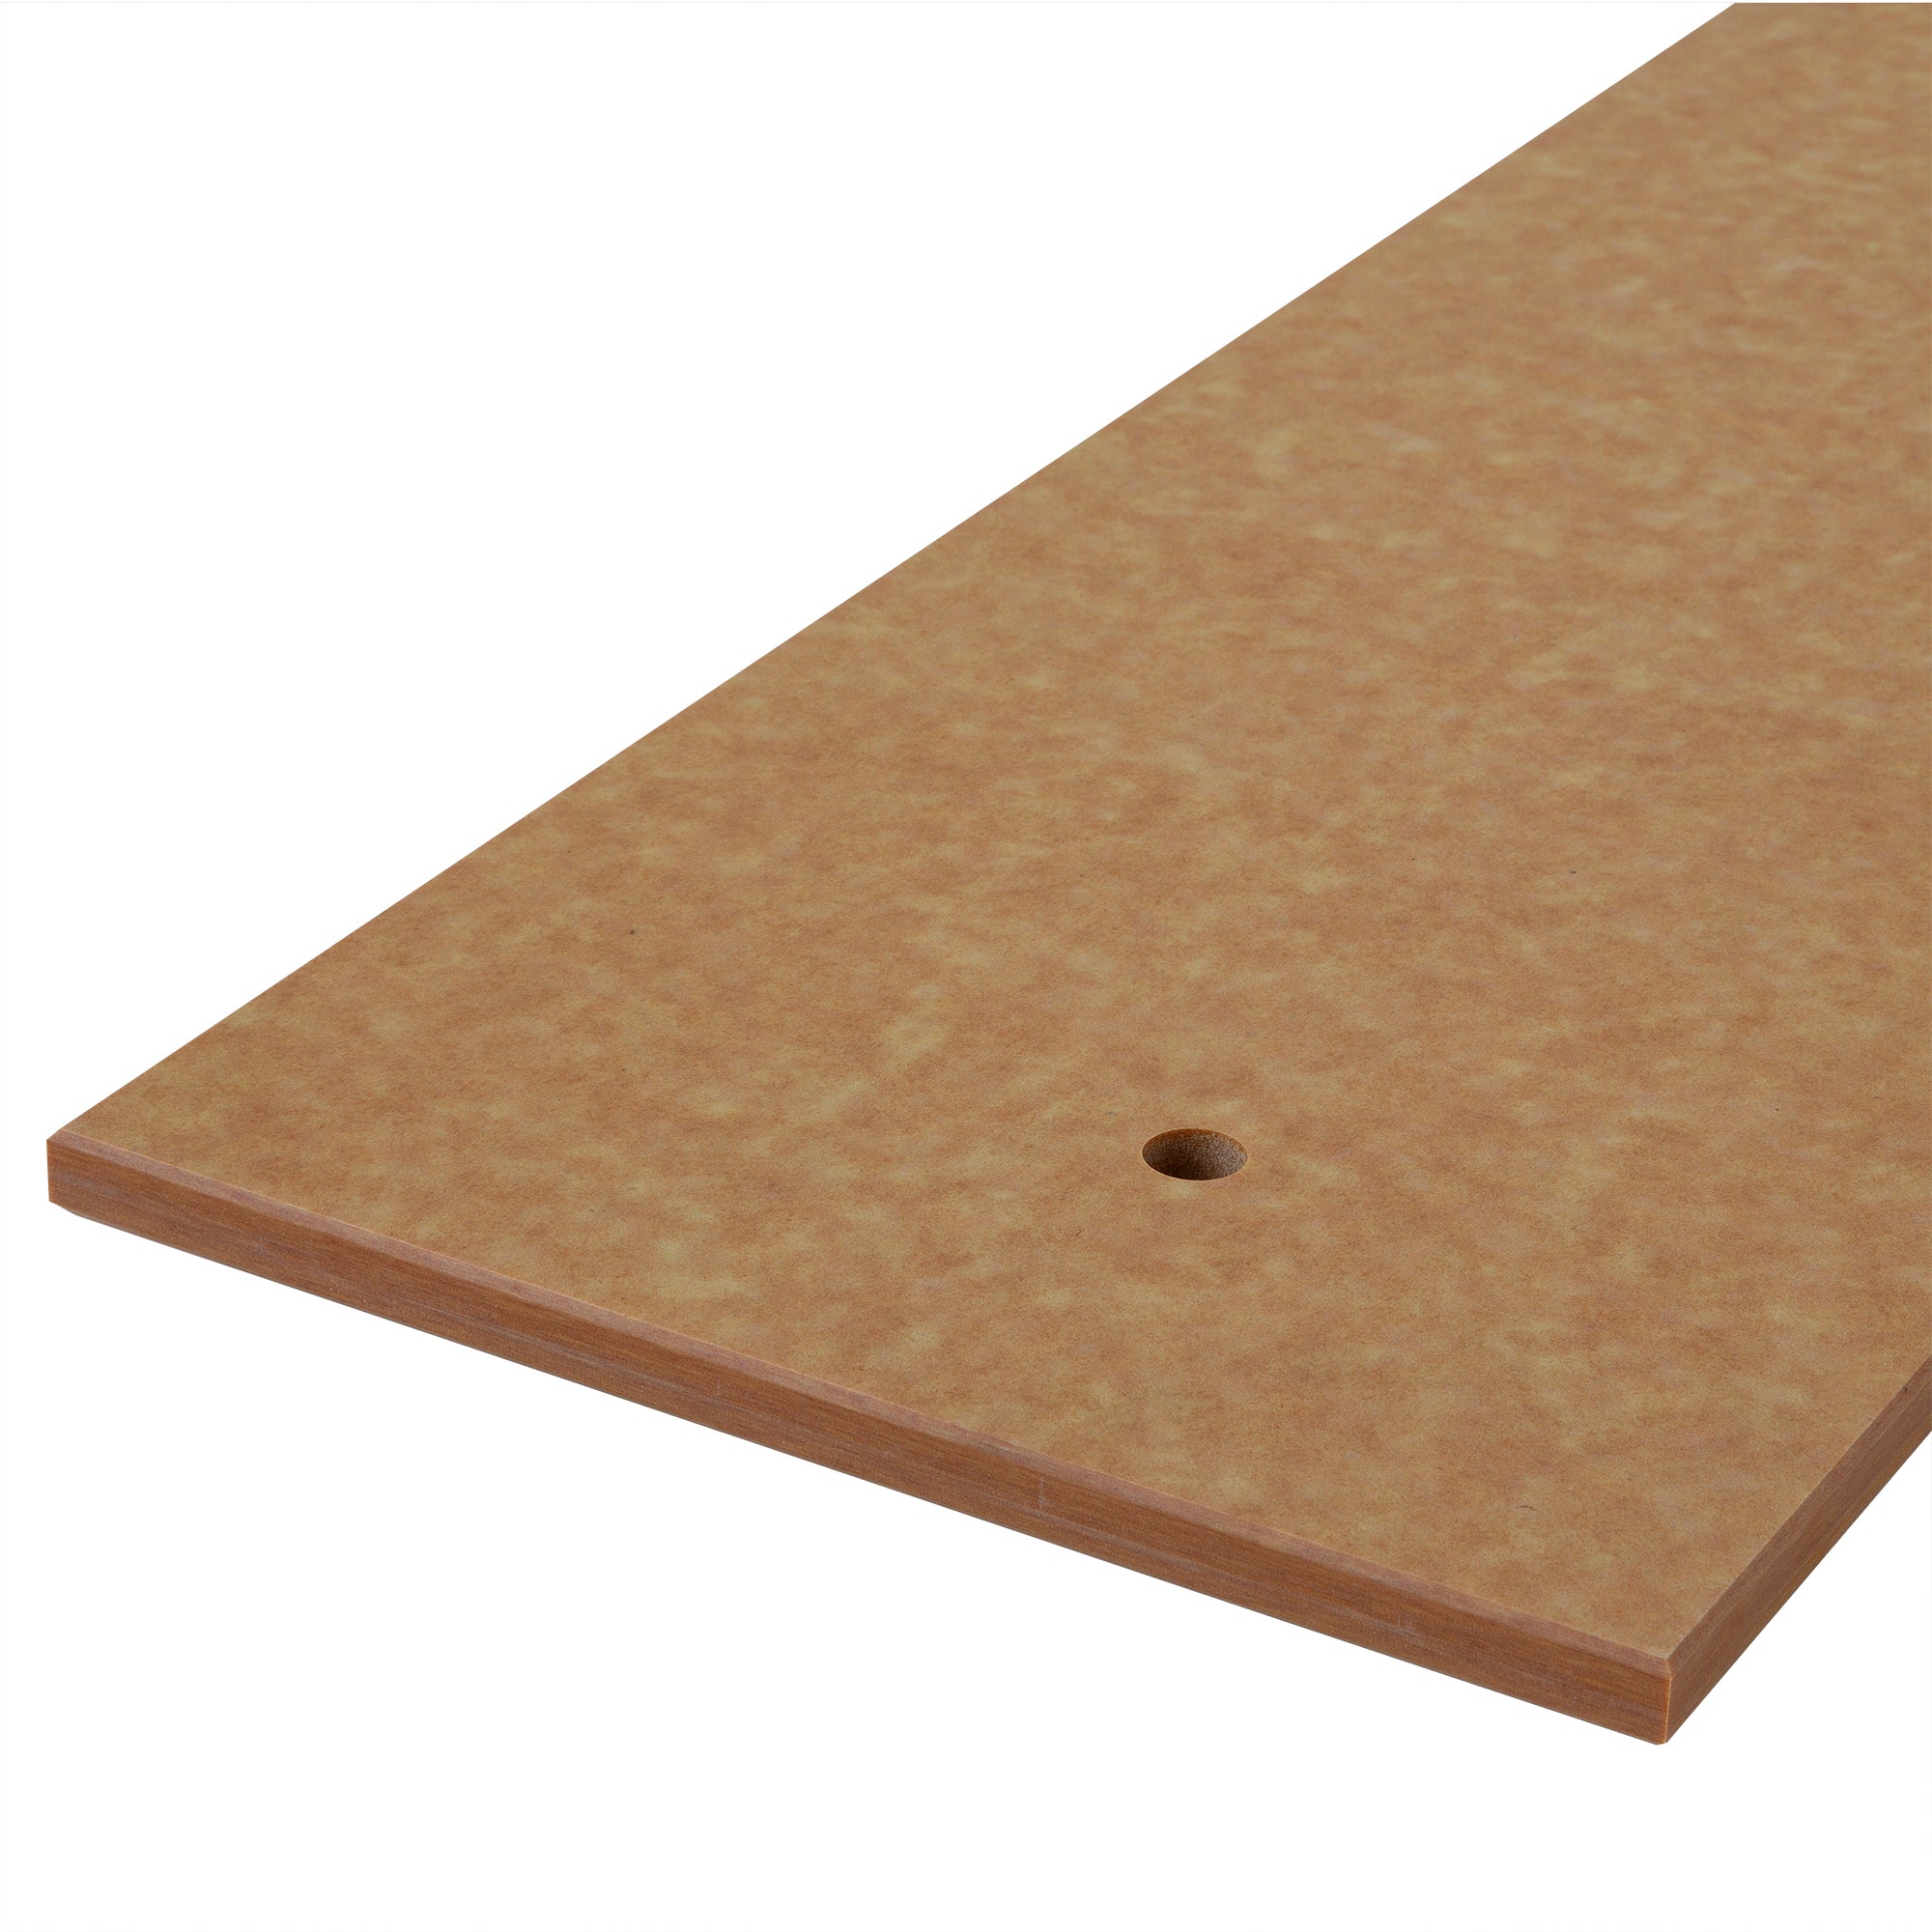 Composite wood-tone, pre-drilled cutting board. 1/2 X 11-3/4 X